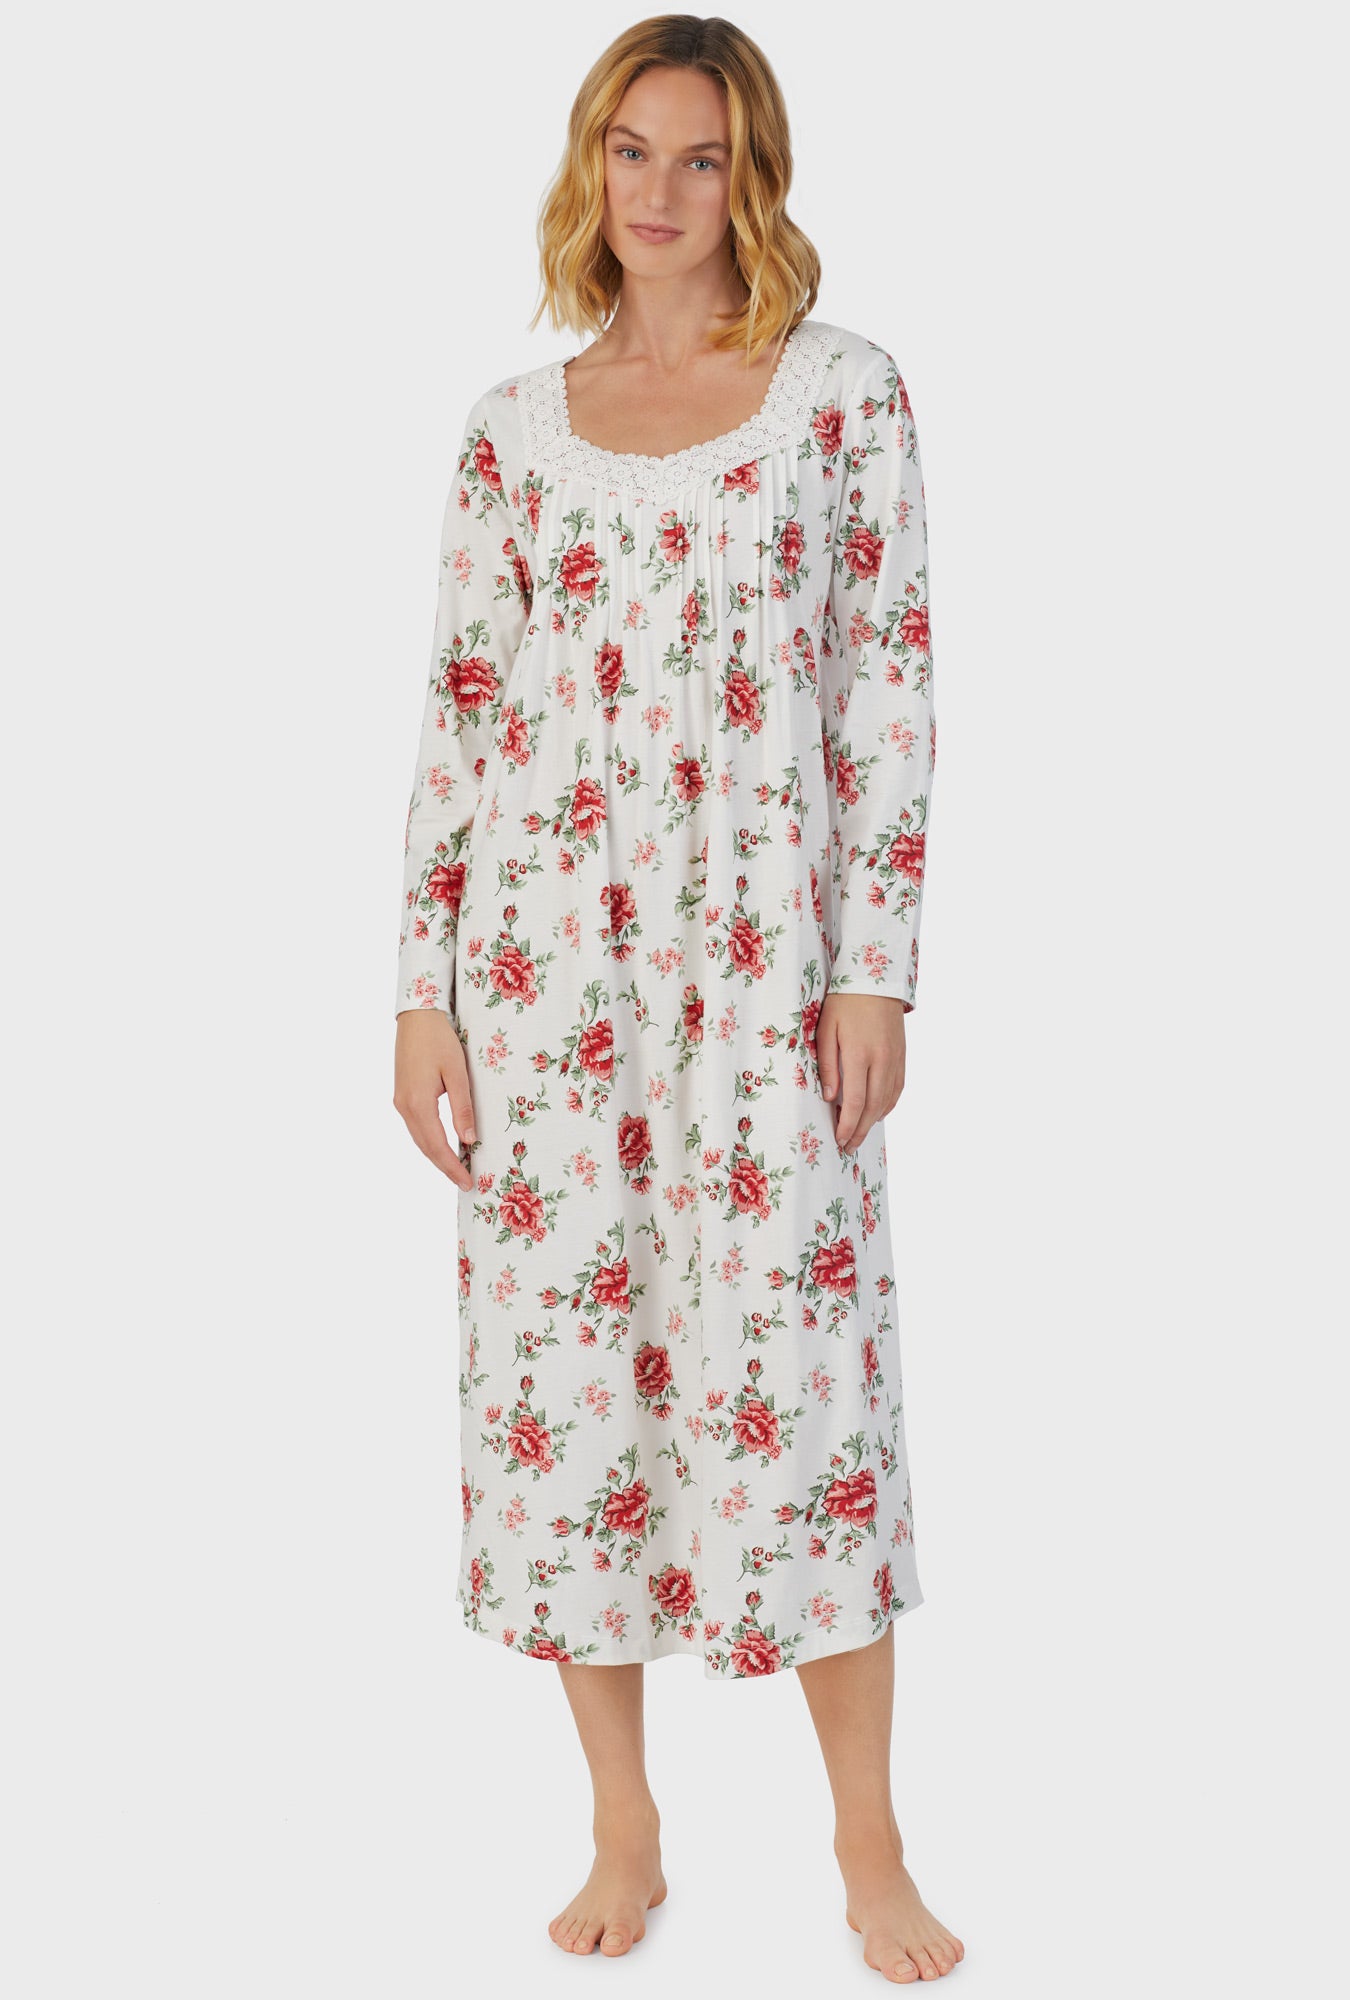 A lady wearing white long sleeve long royal garden nightgown.